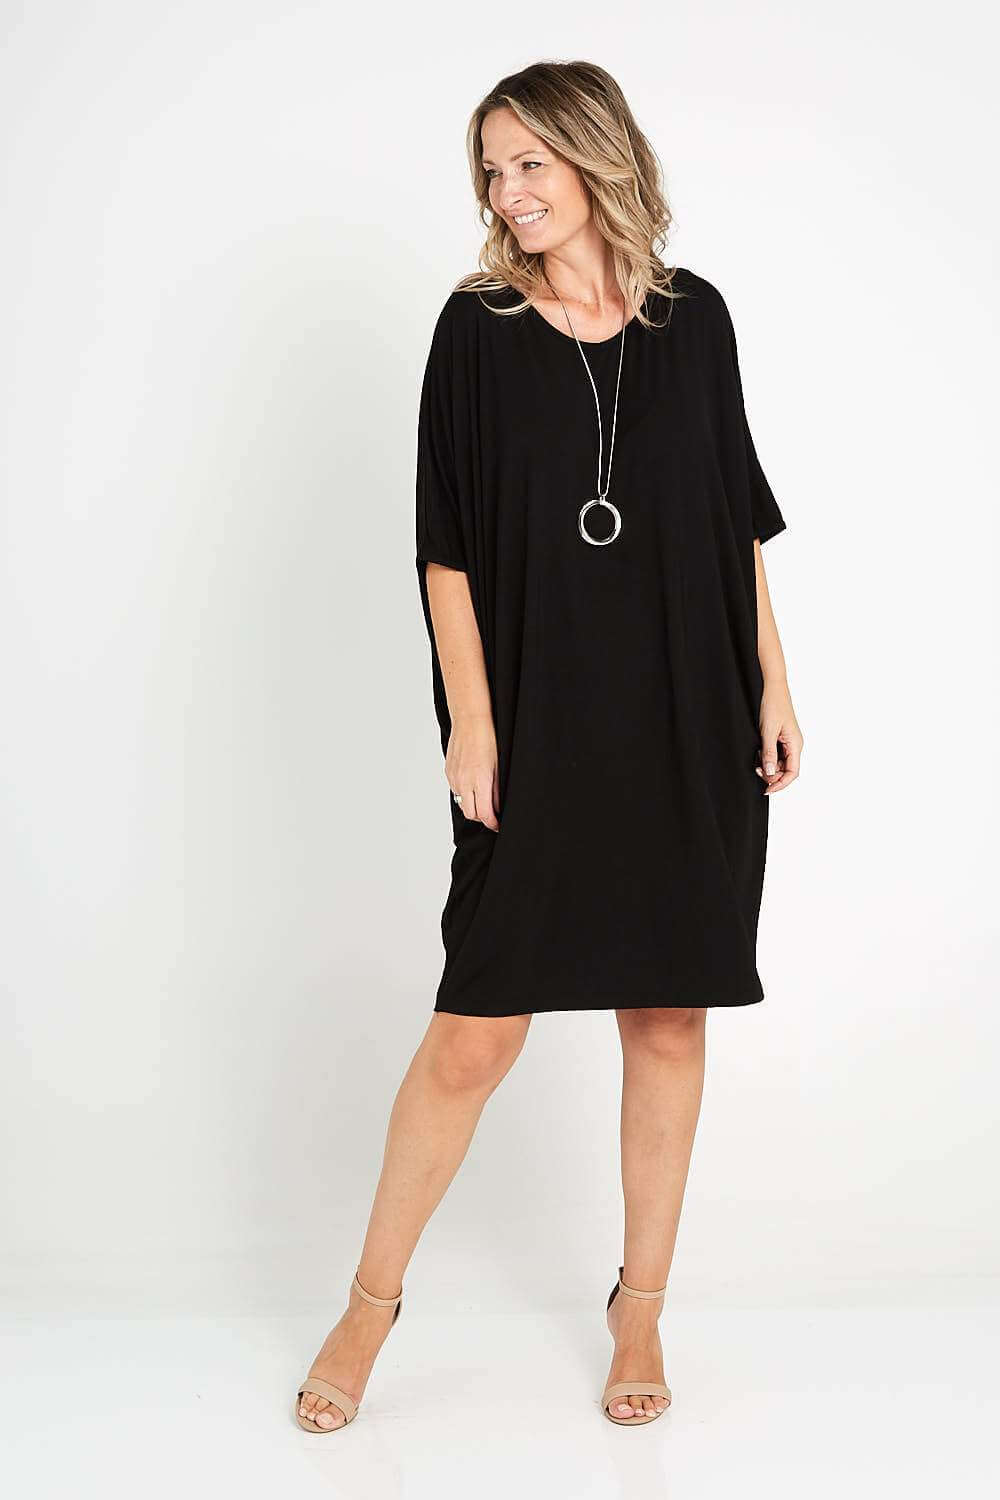 TULIO Fashion - Bamboo Cocoon Dress - Black